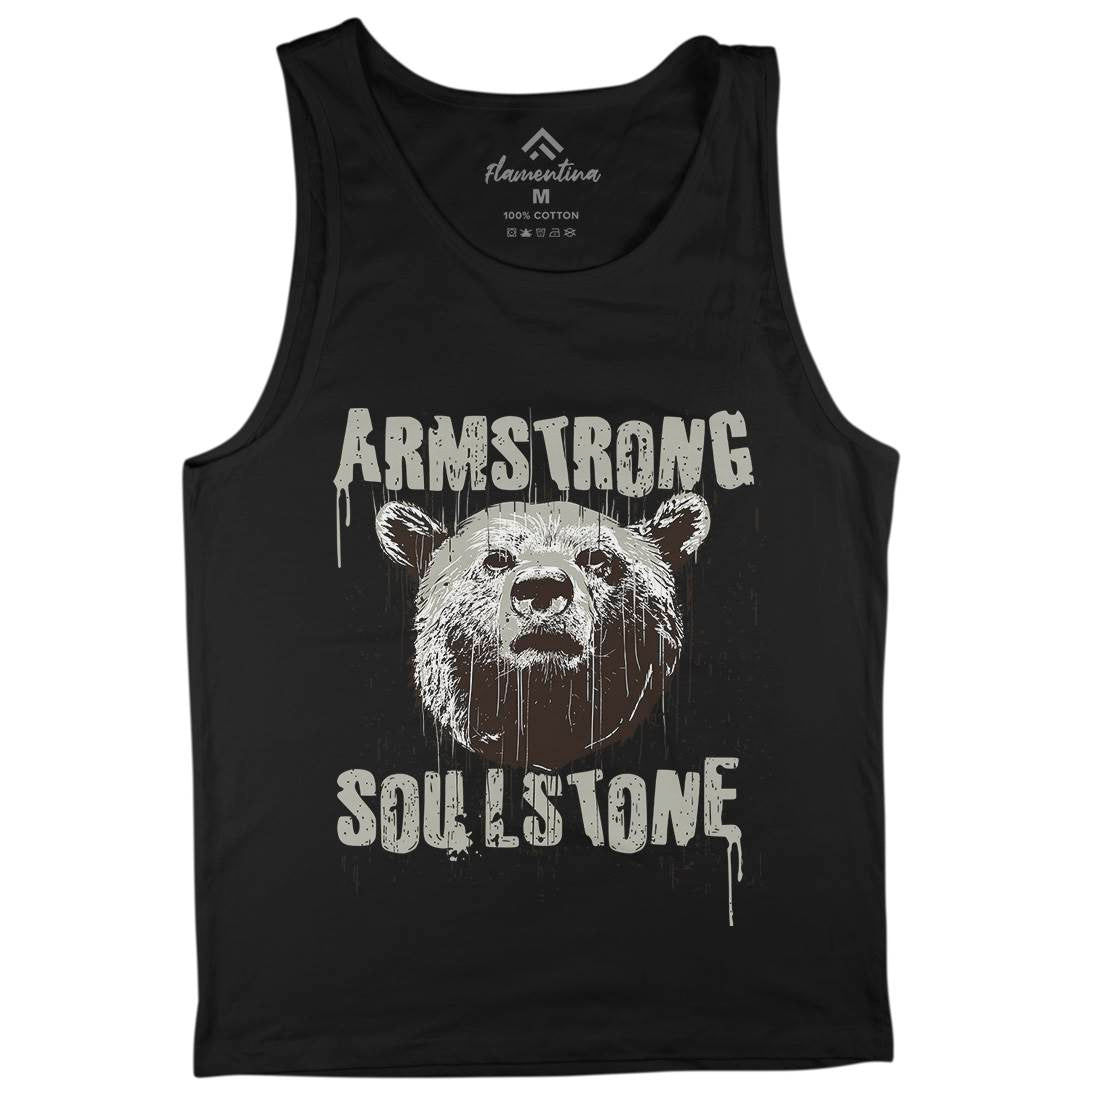 Bear Strong Mens Tank Top Vest Animals B683